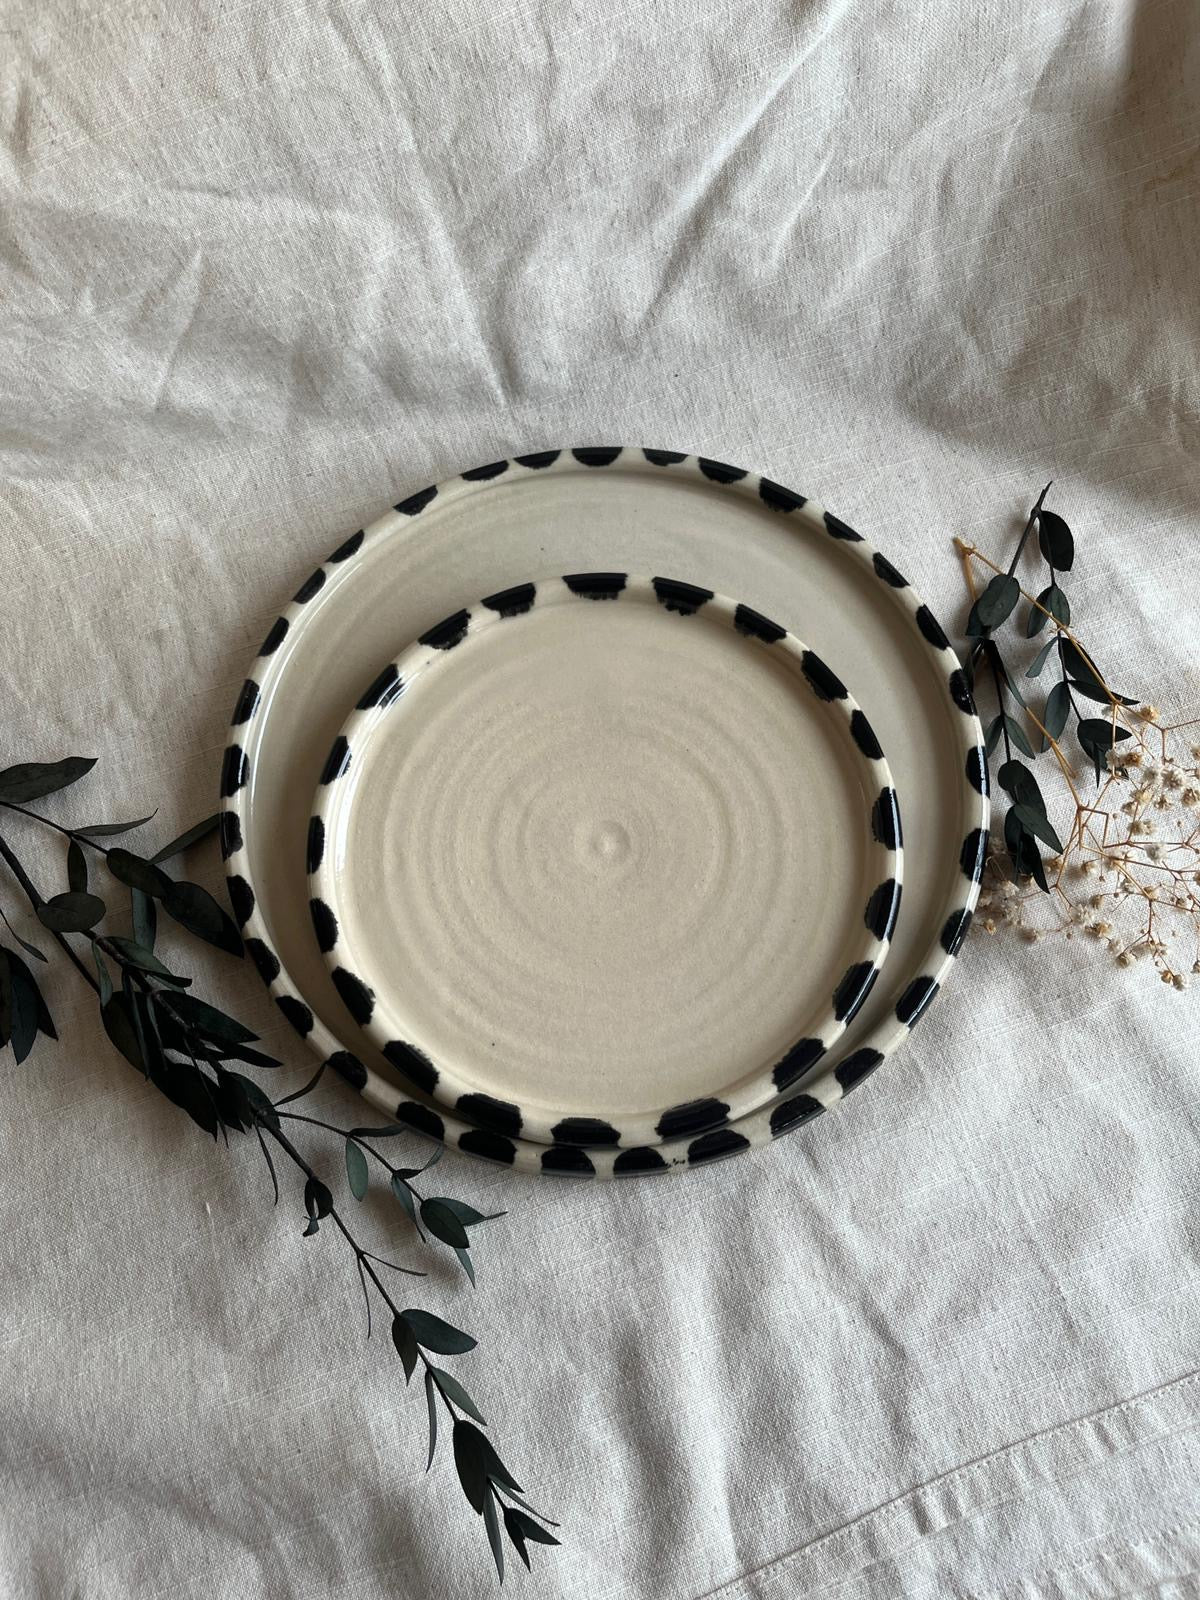 Stripe Ceramic Plate